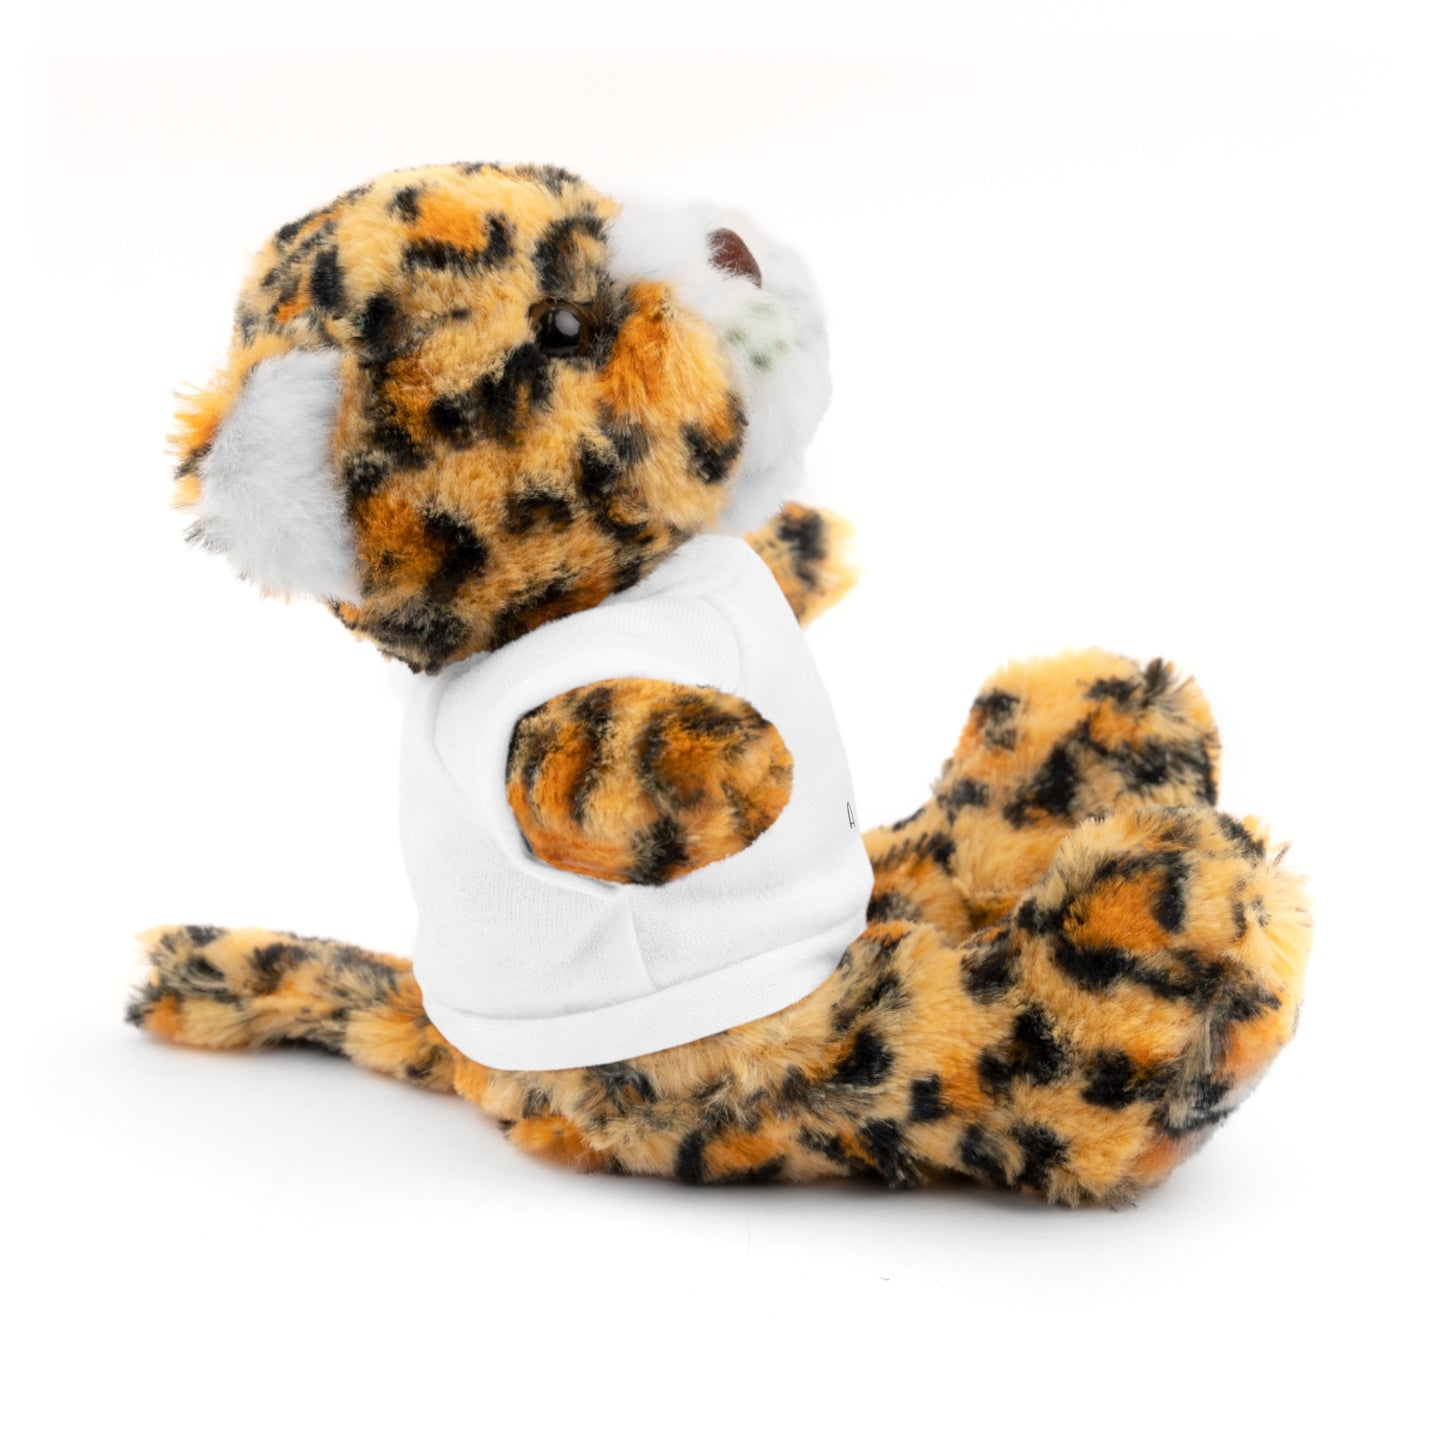 A Babyish Life - Stuffed Animals with Tee